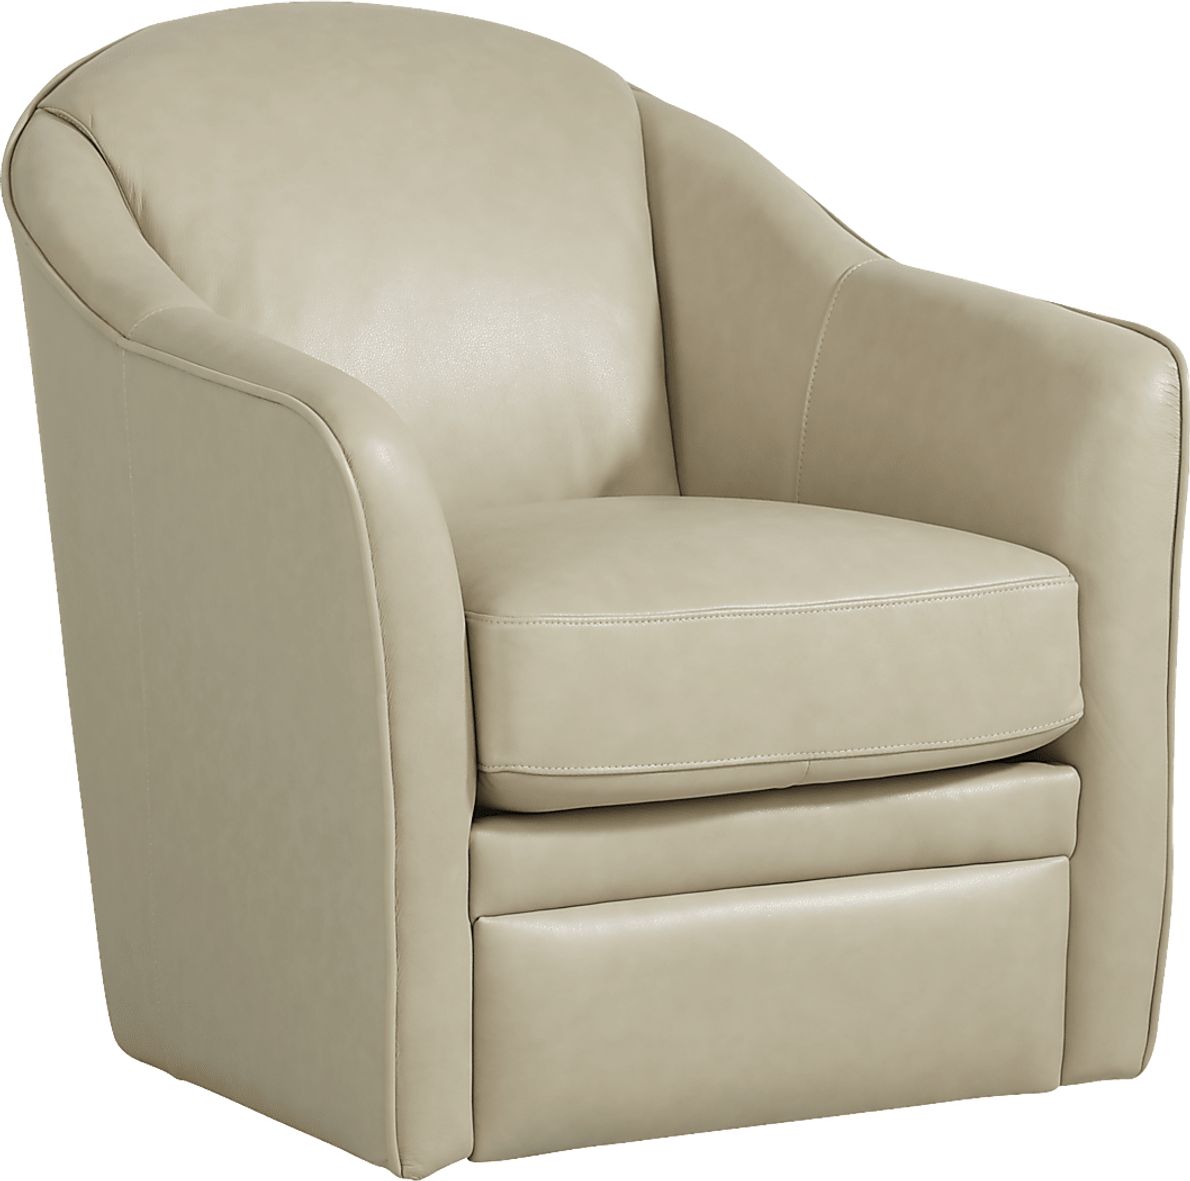 Livorno Lane Leather Swivel Chair